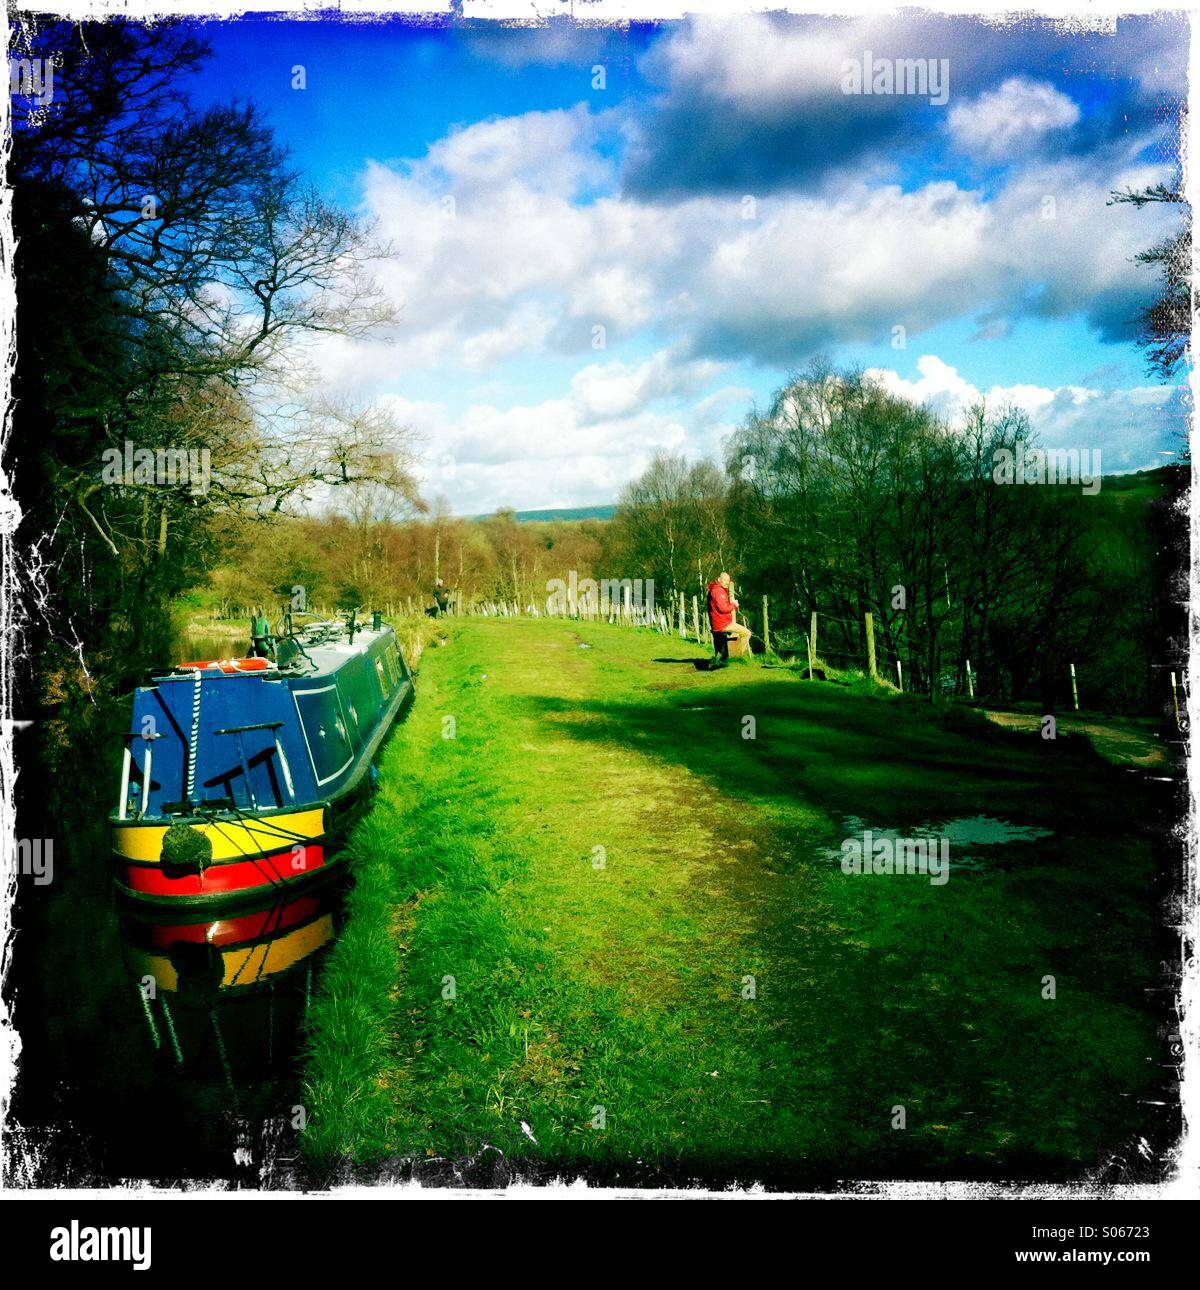 Narrowboat on Caldon canal near Leek, North Staffordshire, England Stock Photo